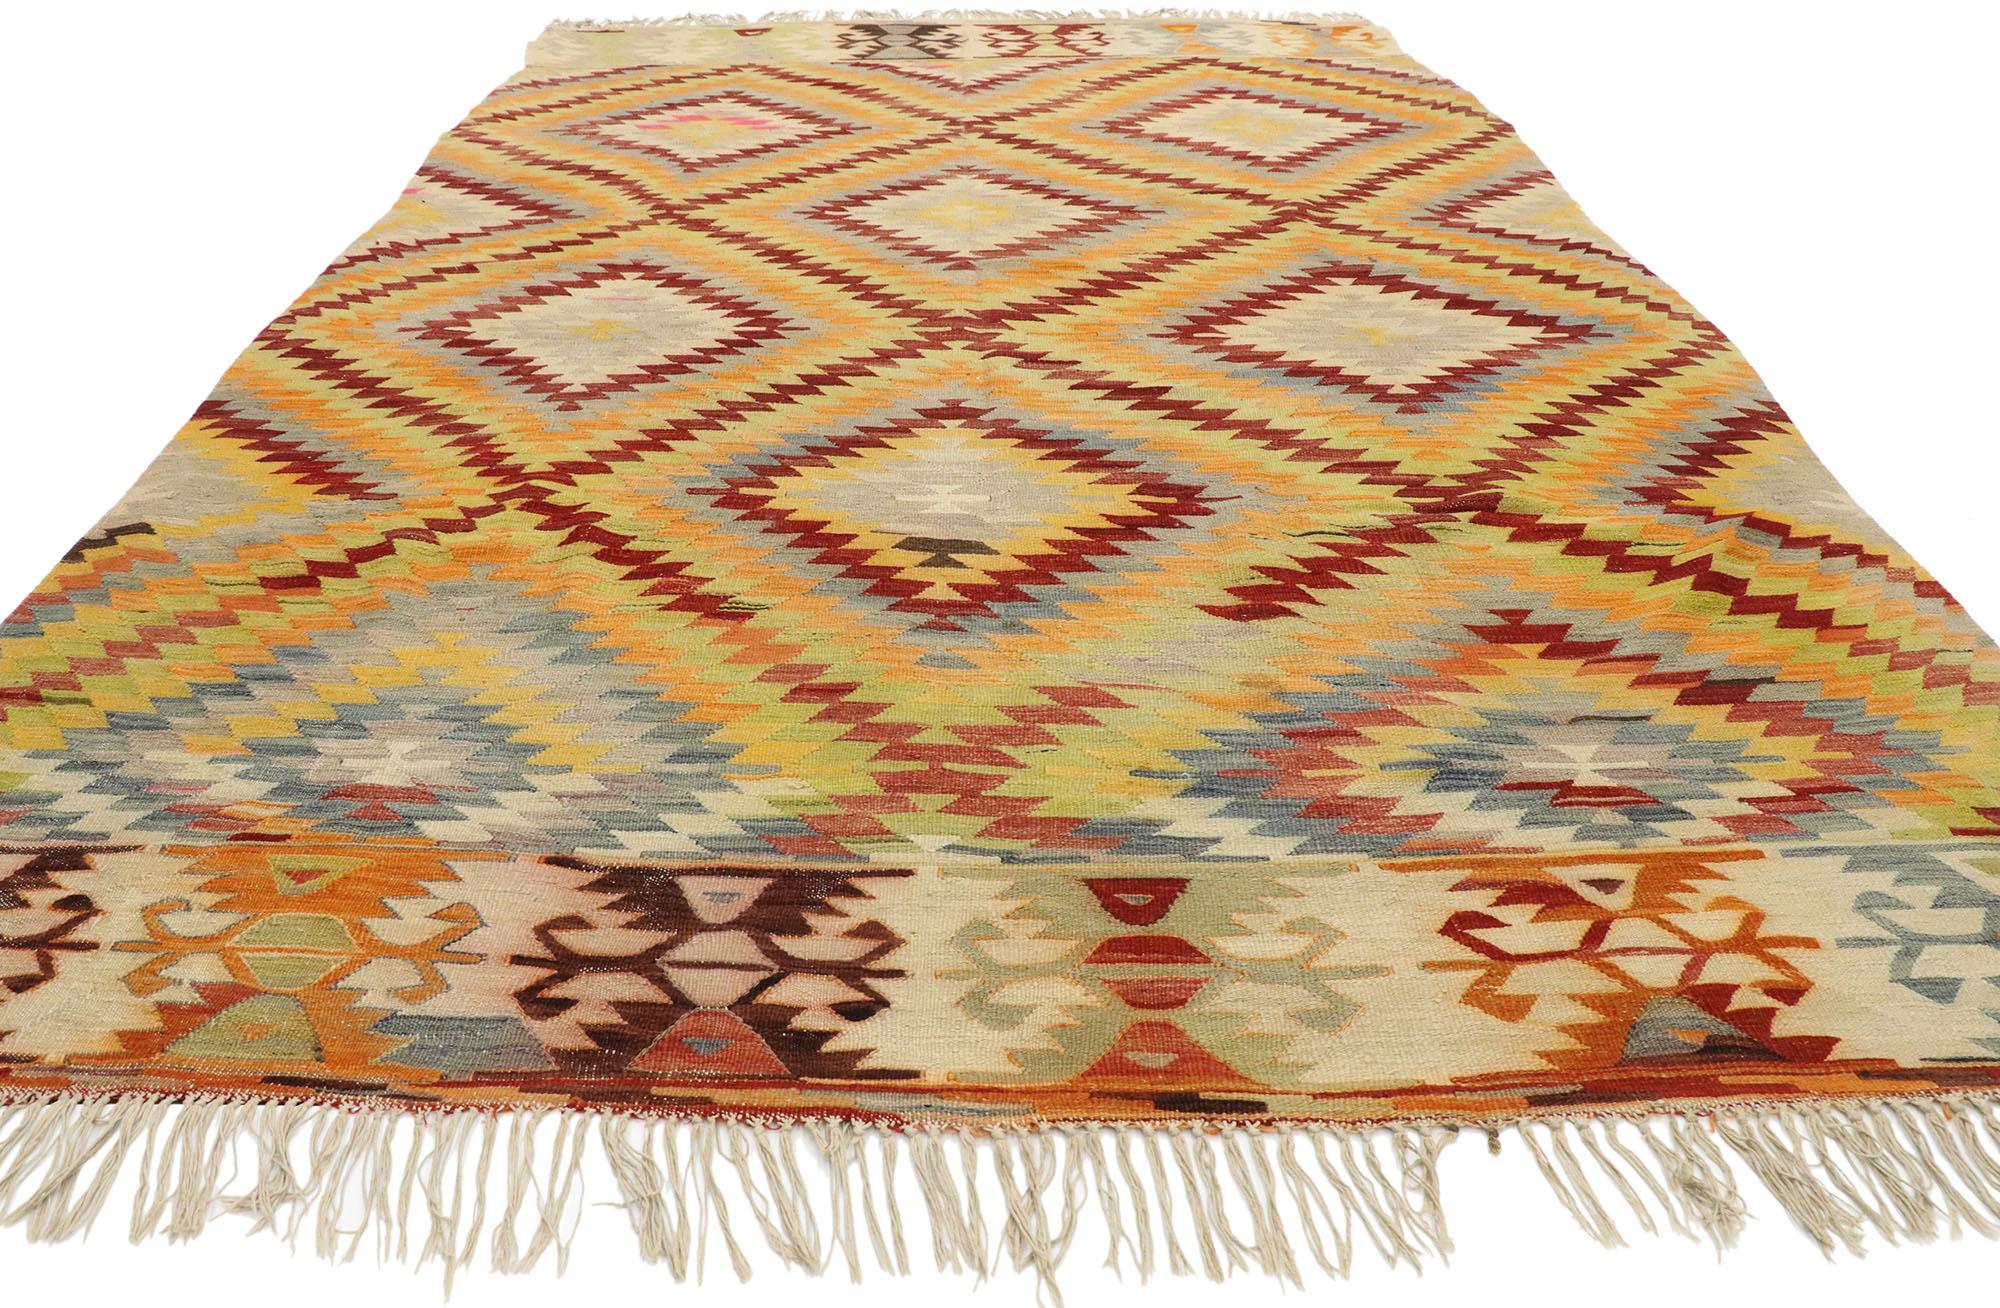 Hand-Woven Vintage Turkish Kilim Rug with Southwestern Desert Style